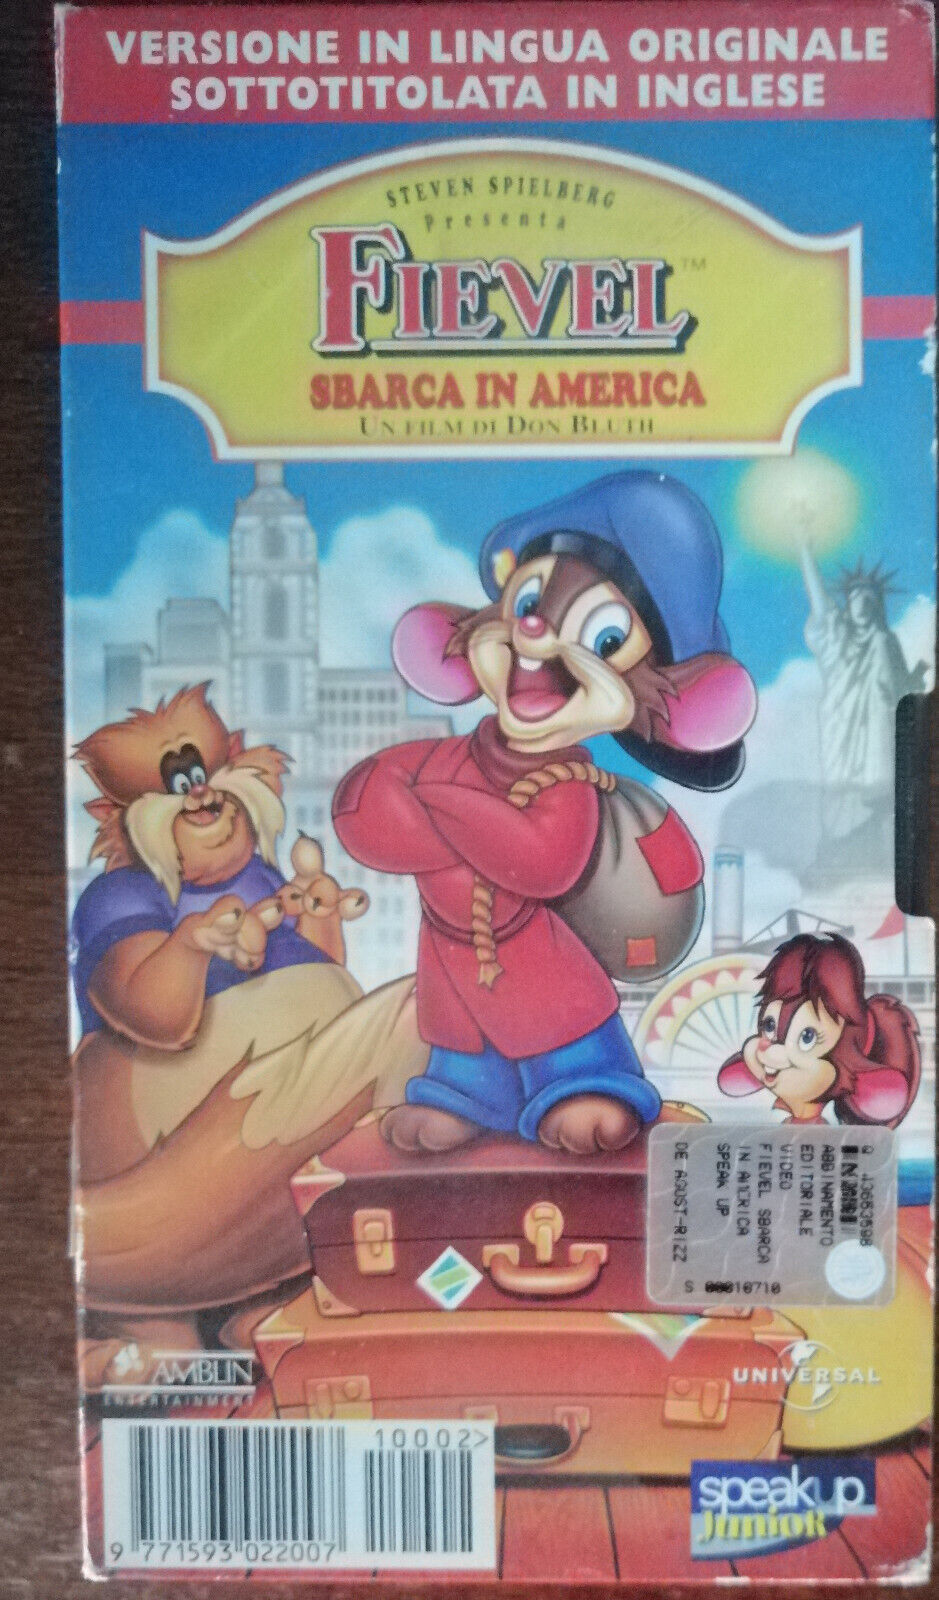 Fievel sbarca in America - Universal,1986 - VHS - A 